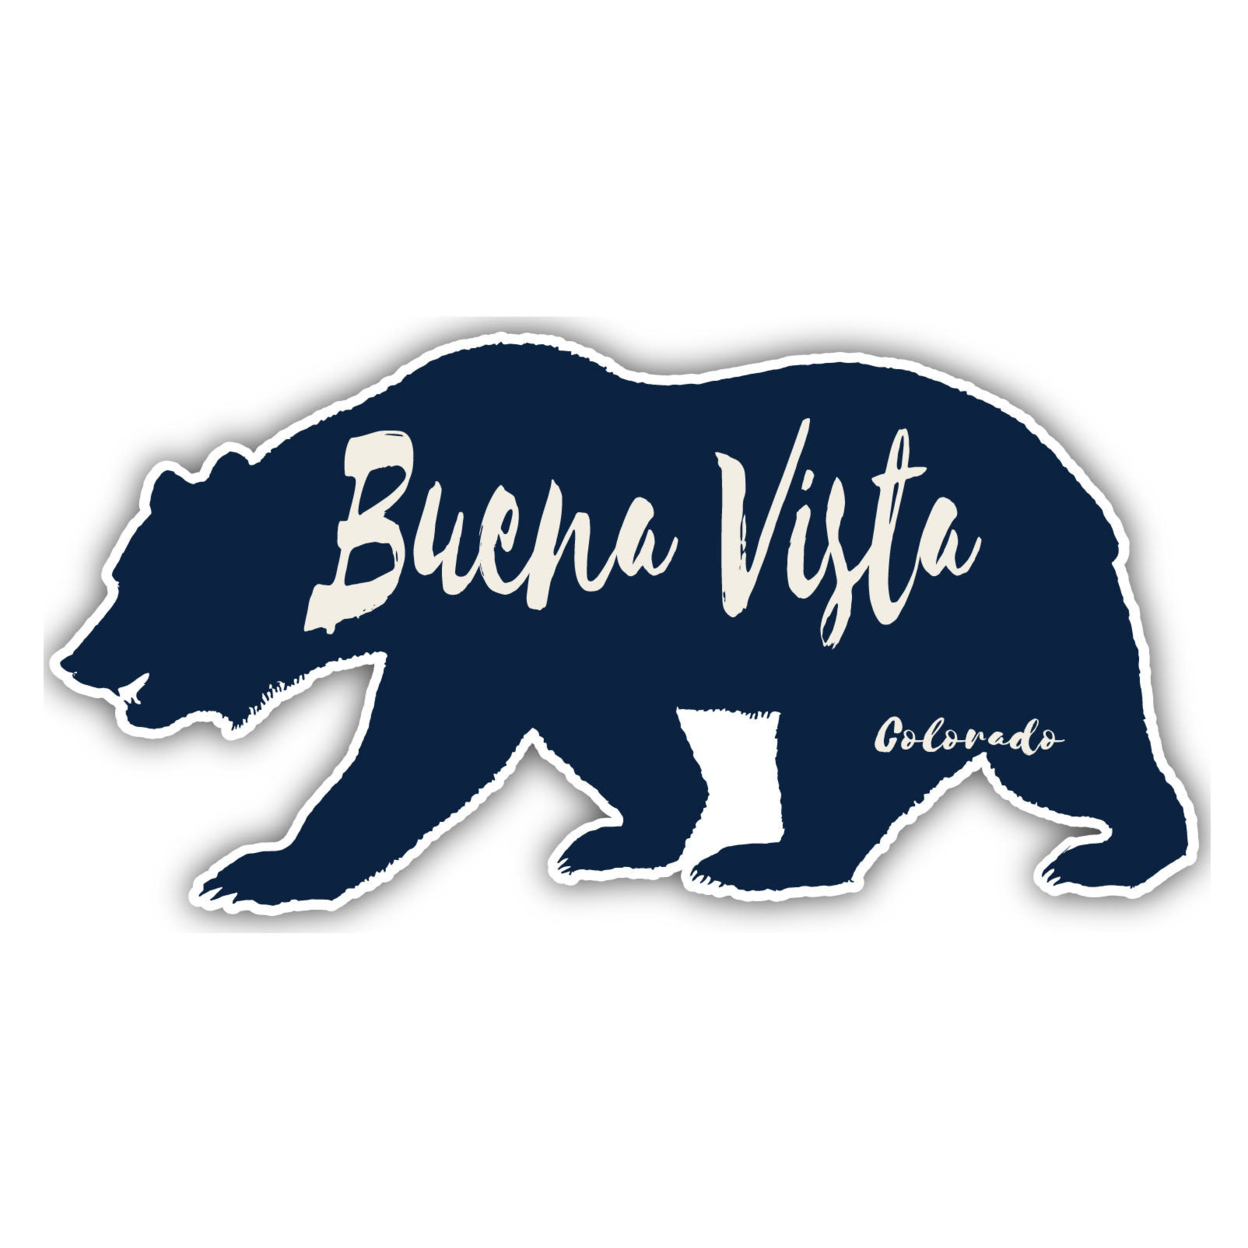 Buena Vista Colorado Souvenir Decorative Stickers (Choose Theme And Size) - Single Unit, 6-Inch, Bear